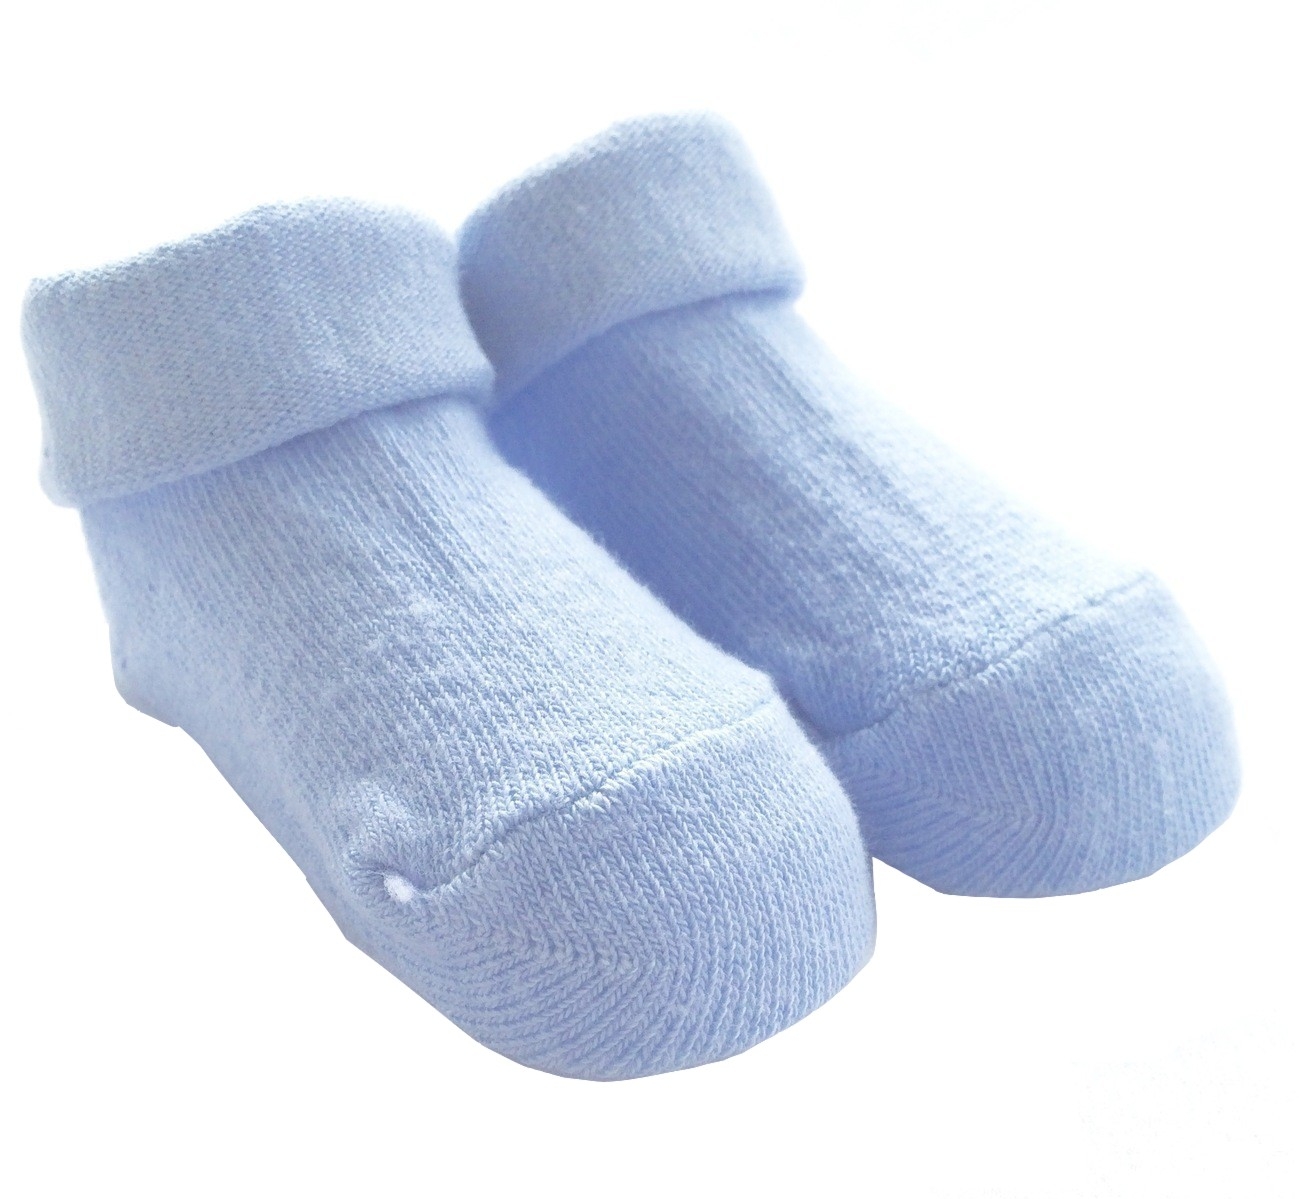 pale blue baby socks